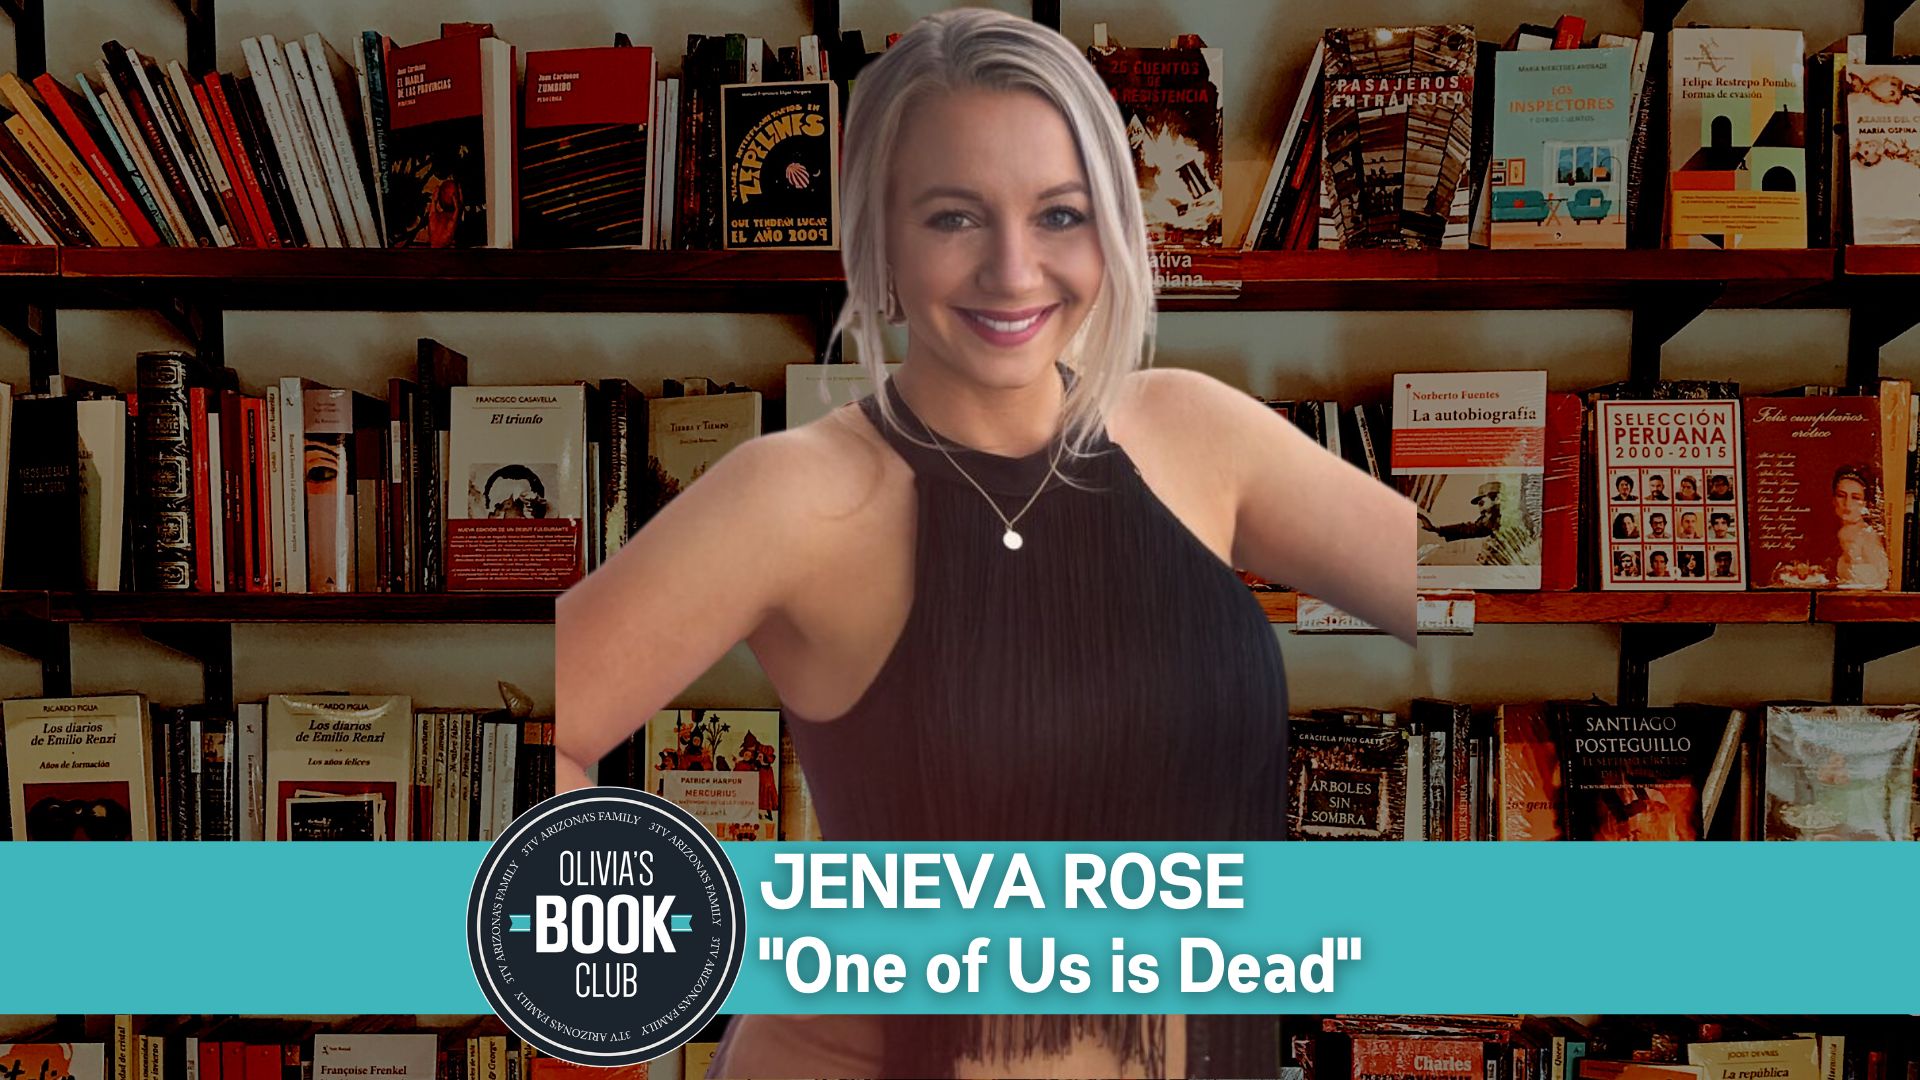 One of Us Is Dead by Jeneva Rose